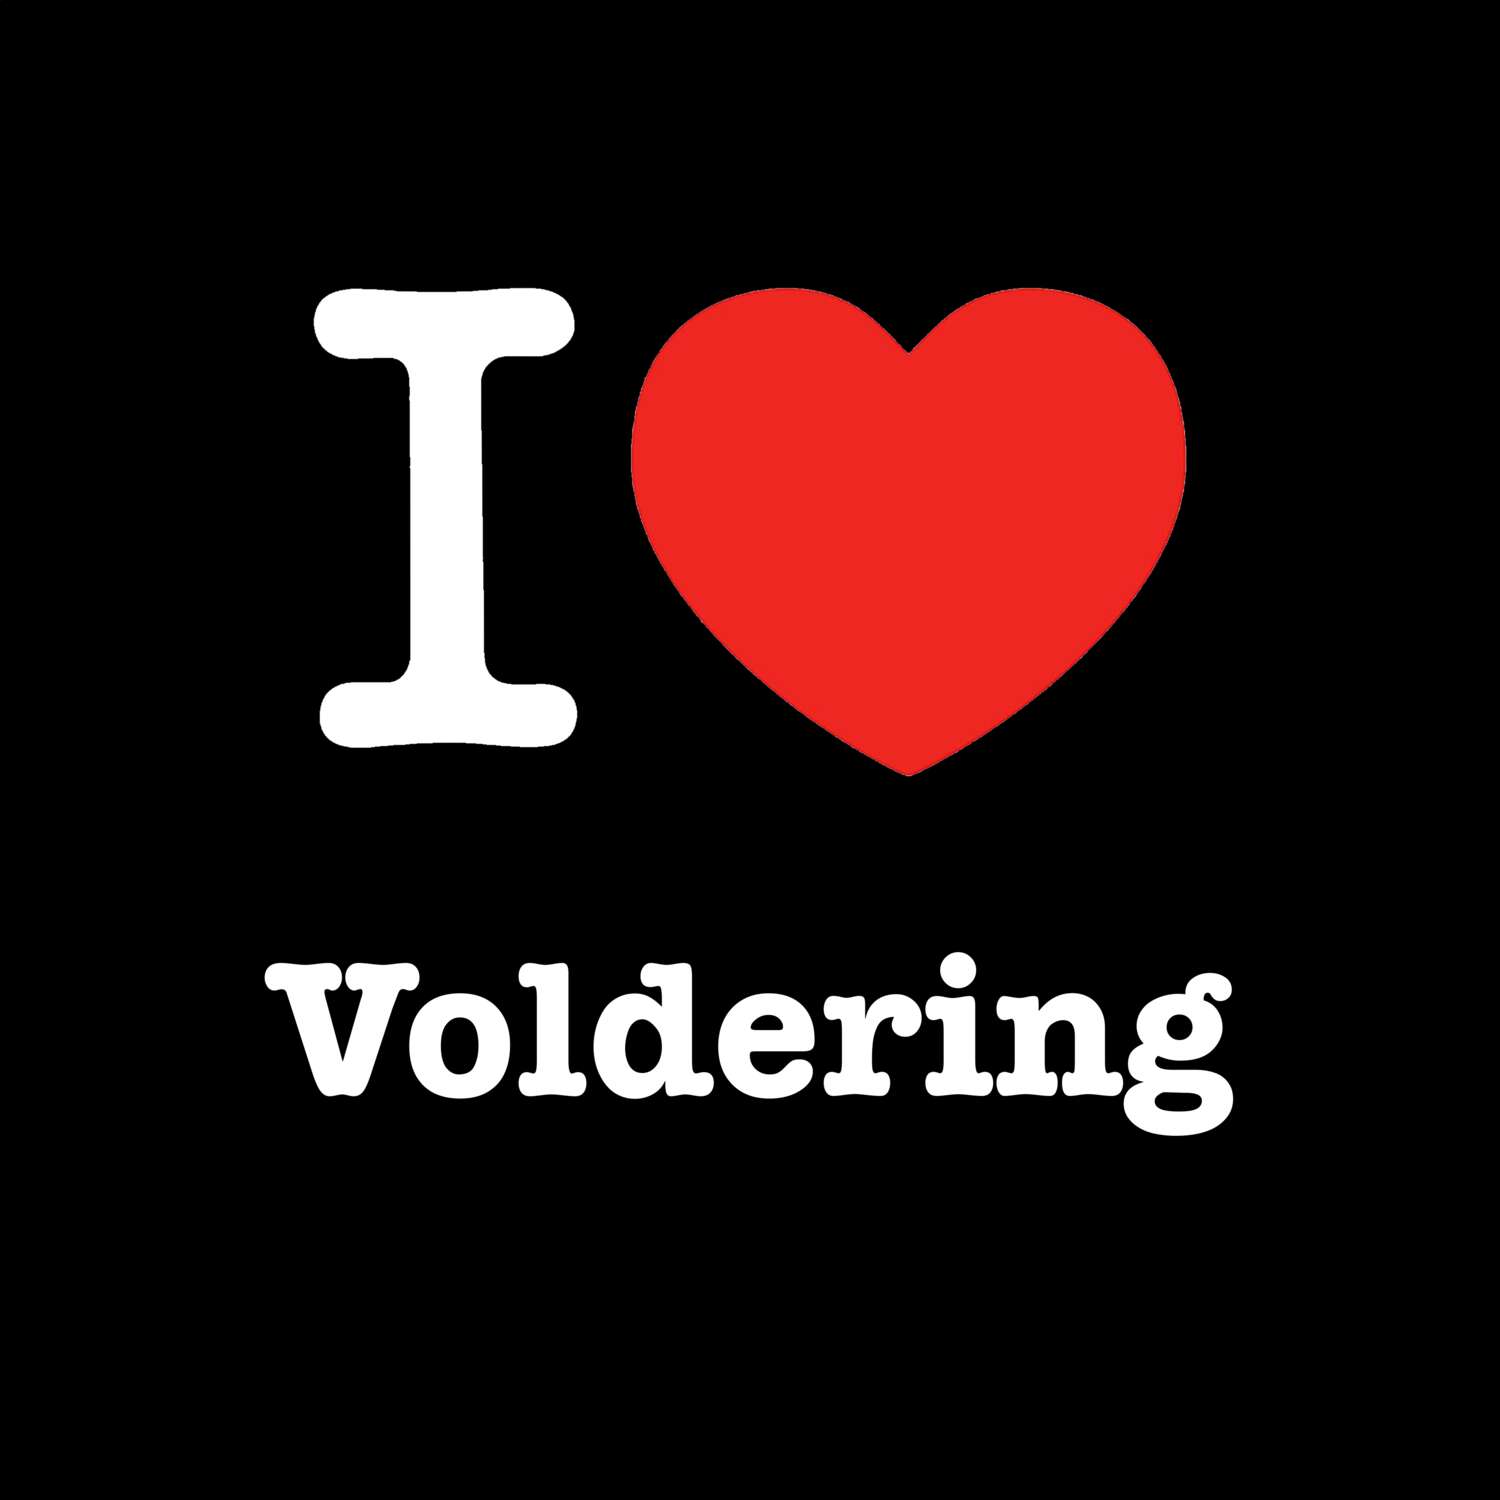 Voldering T-Shirt »I love«